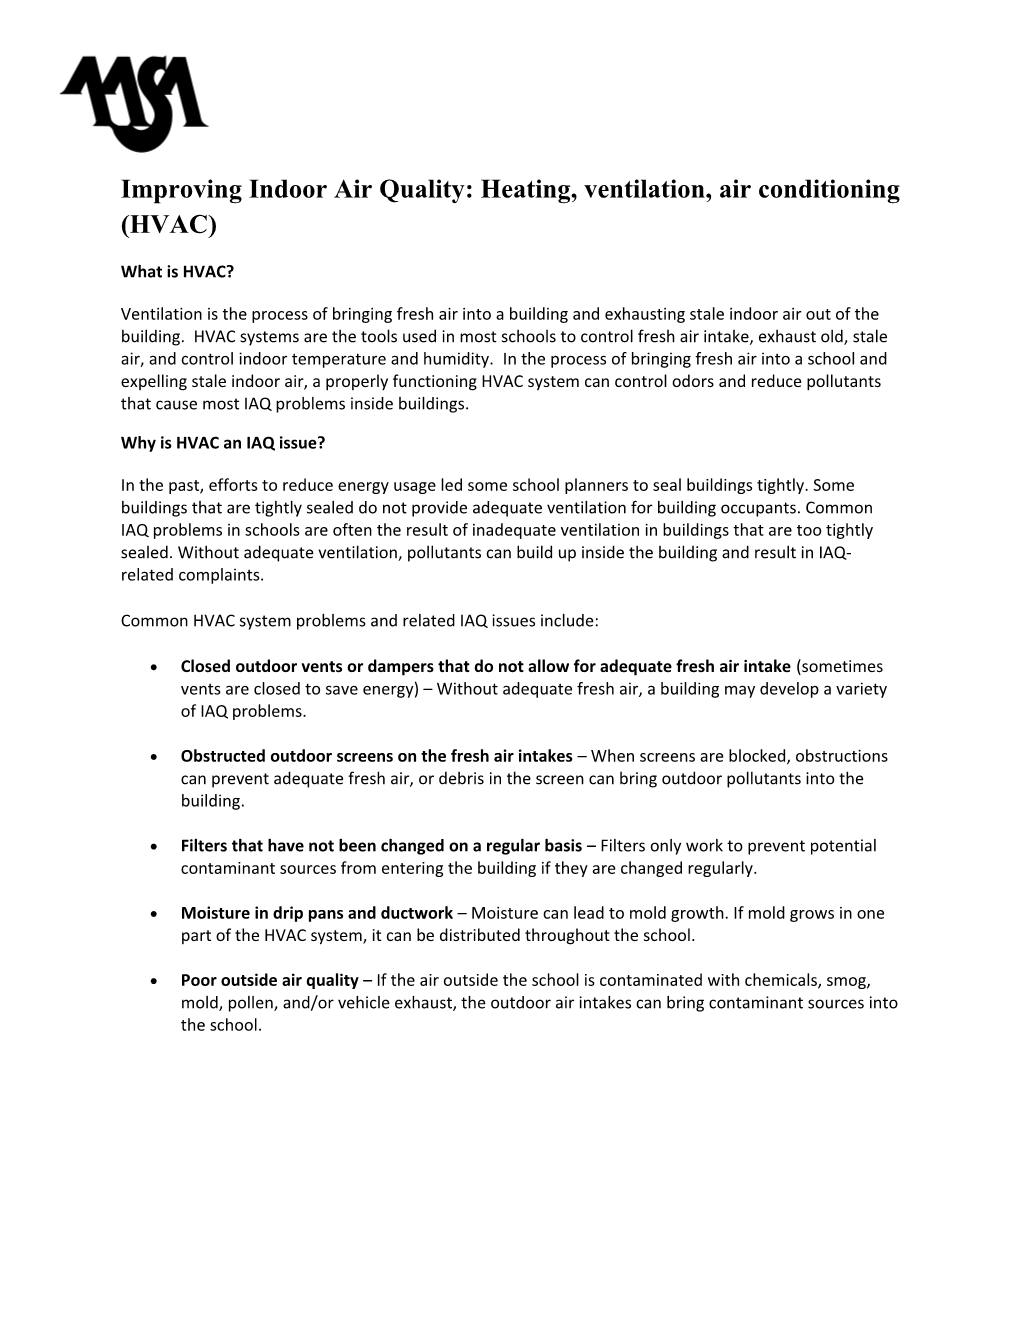 Improving Indoor Air Quality: Heating, Ventilation, Air Conditioning (HVAC)